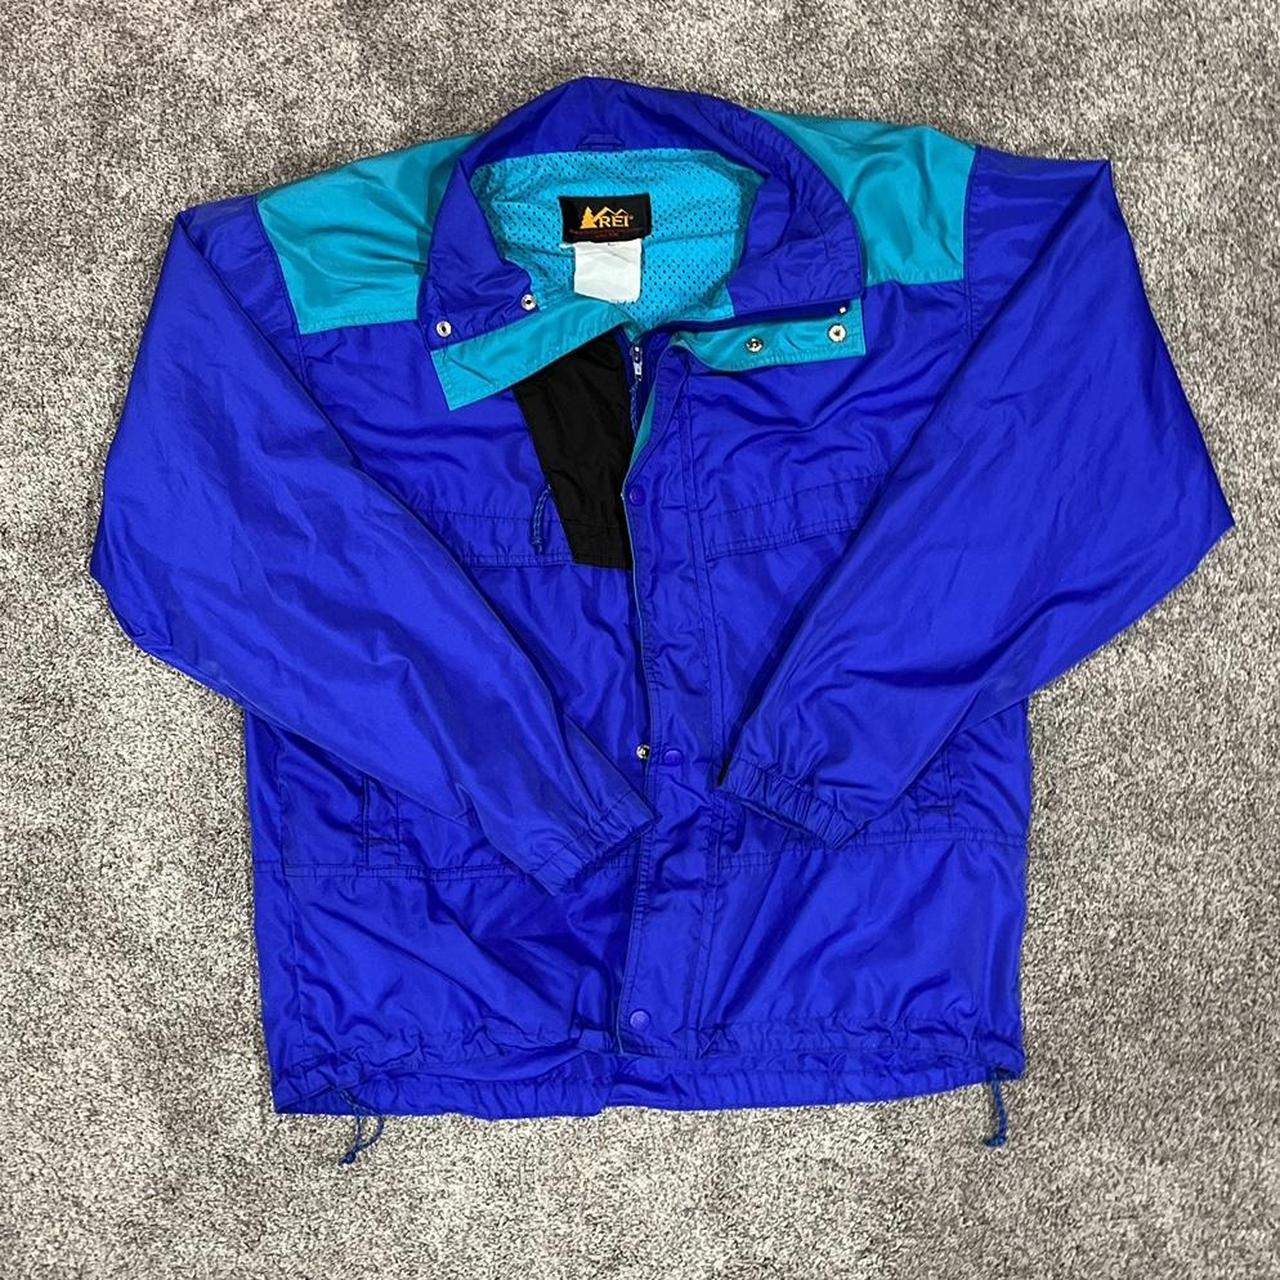 90s REI ski jacket Size L #ski #rei #vintage #90s... - Depop